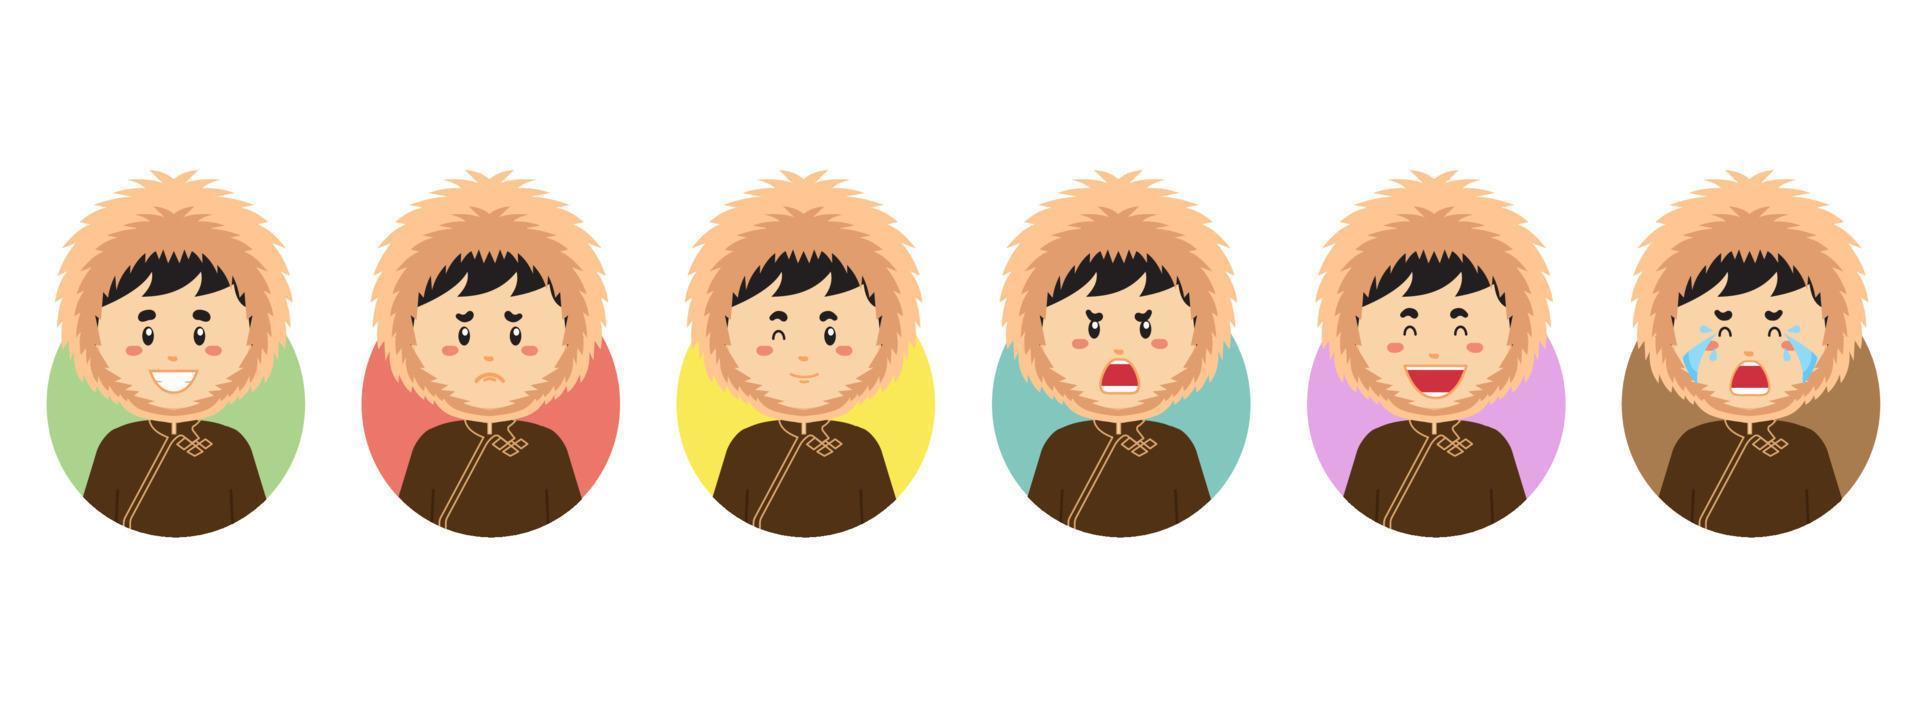 avatar mongol con varias expresiones vector